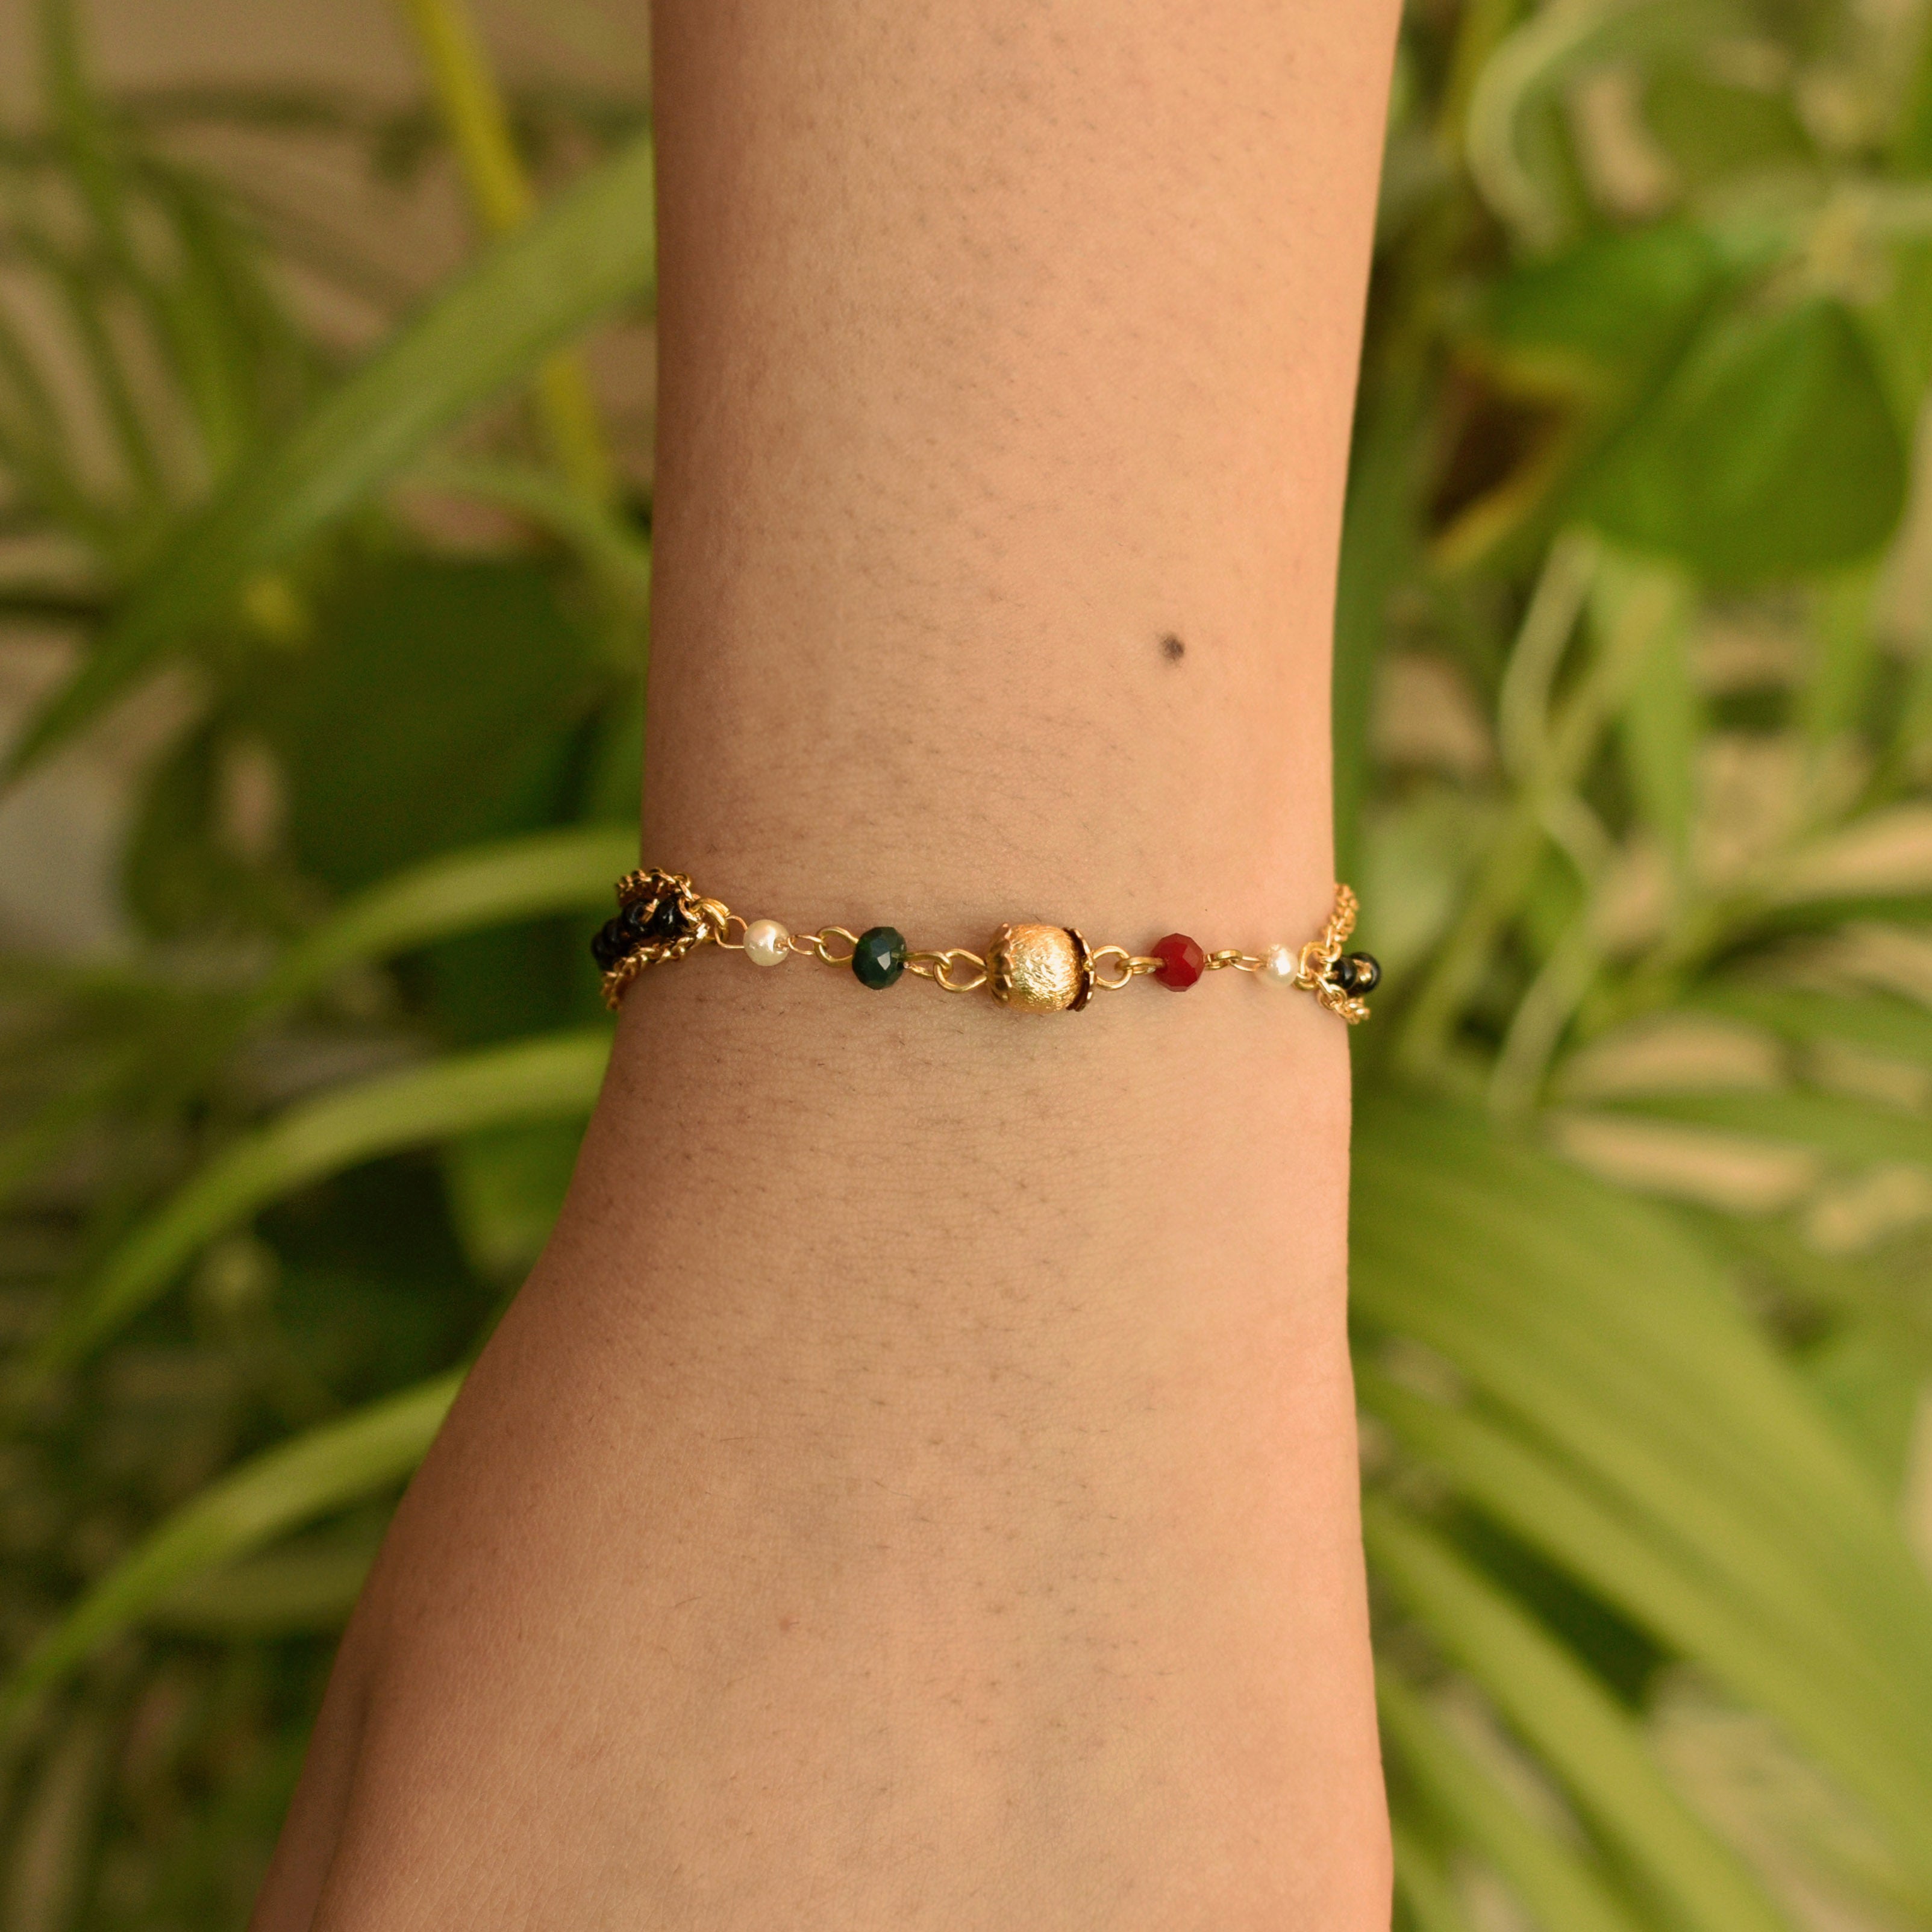 black, red, golden beads mangalsutra bracelet